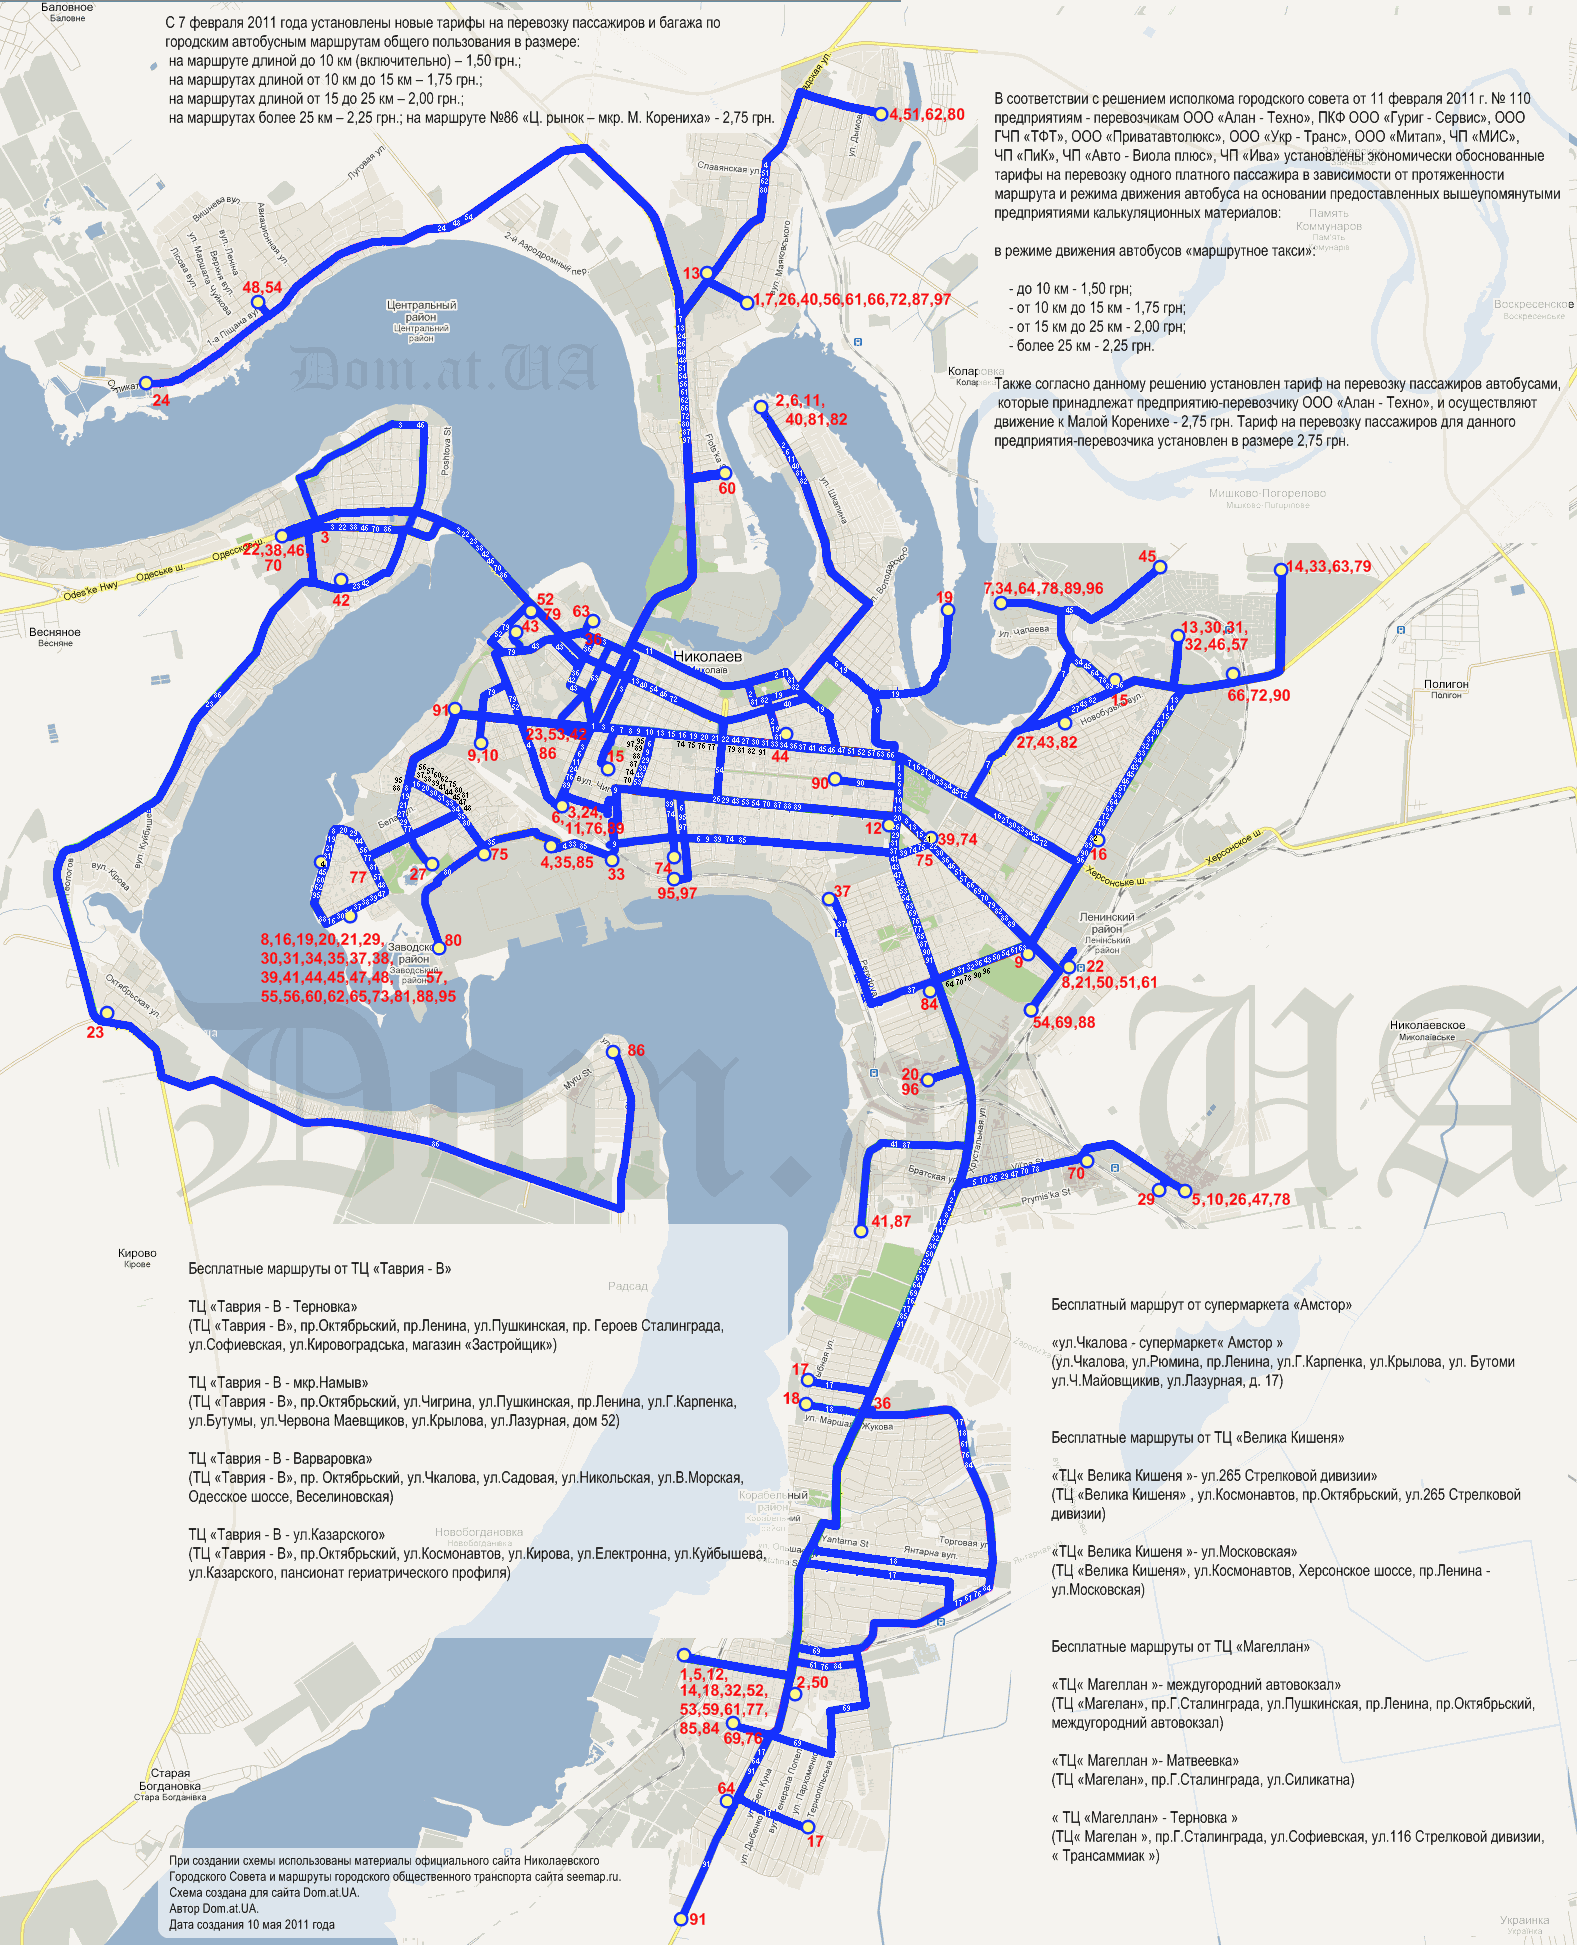 Схема движения маршруток г.Николаева, Украина